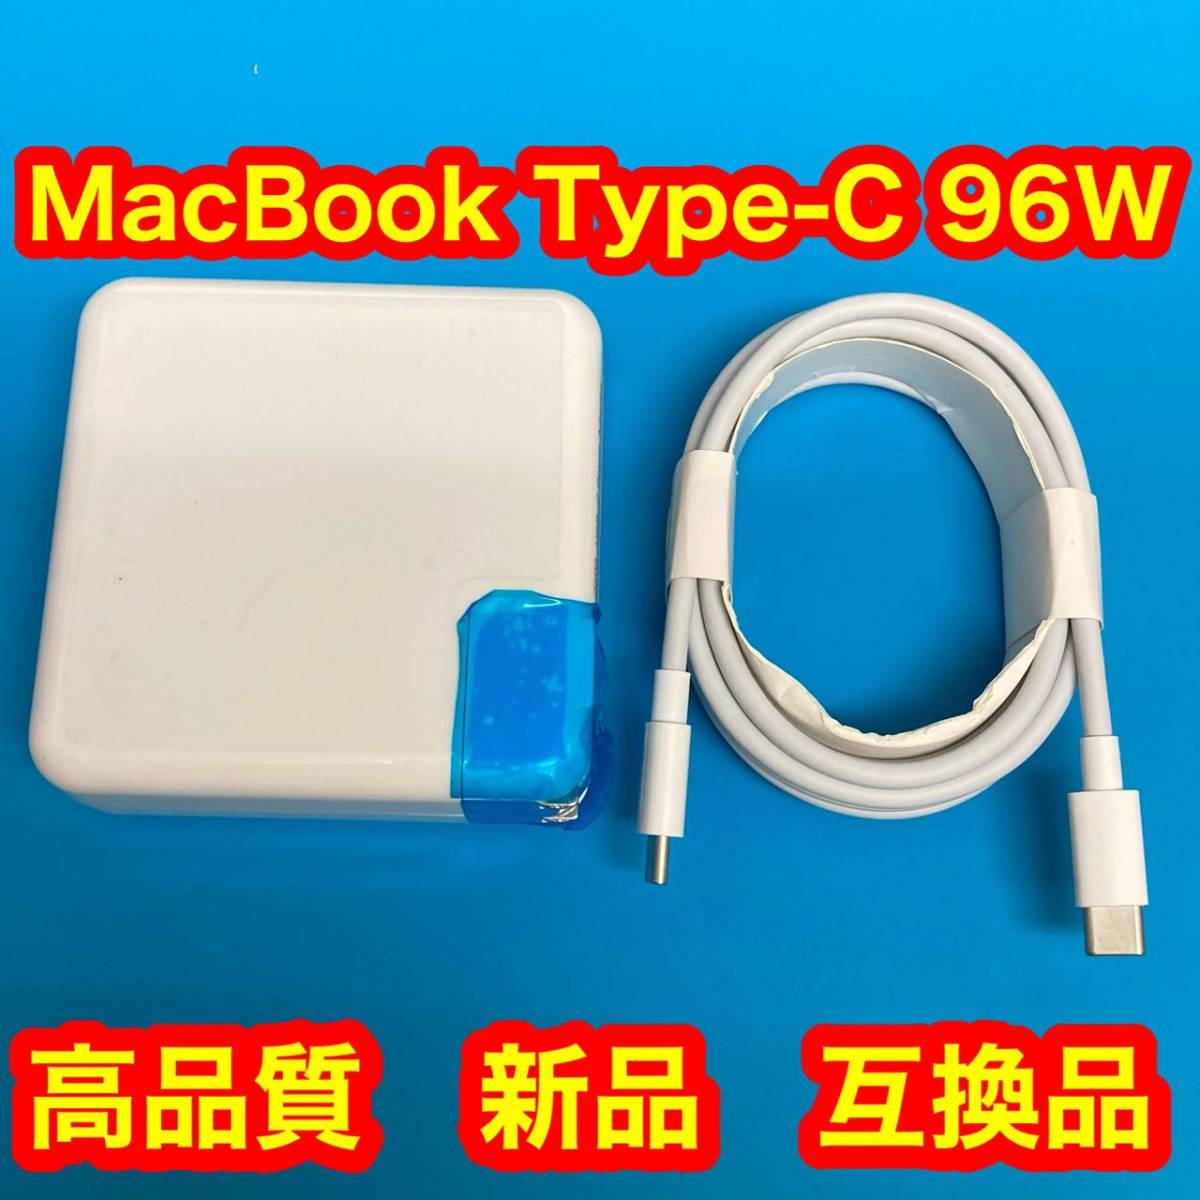 96W Type-C MacBook Pro Air 互換電源アダプター 電源アダプタ- 急速充電器 ケーブル2M_画像1